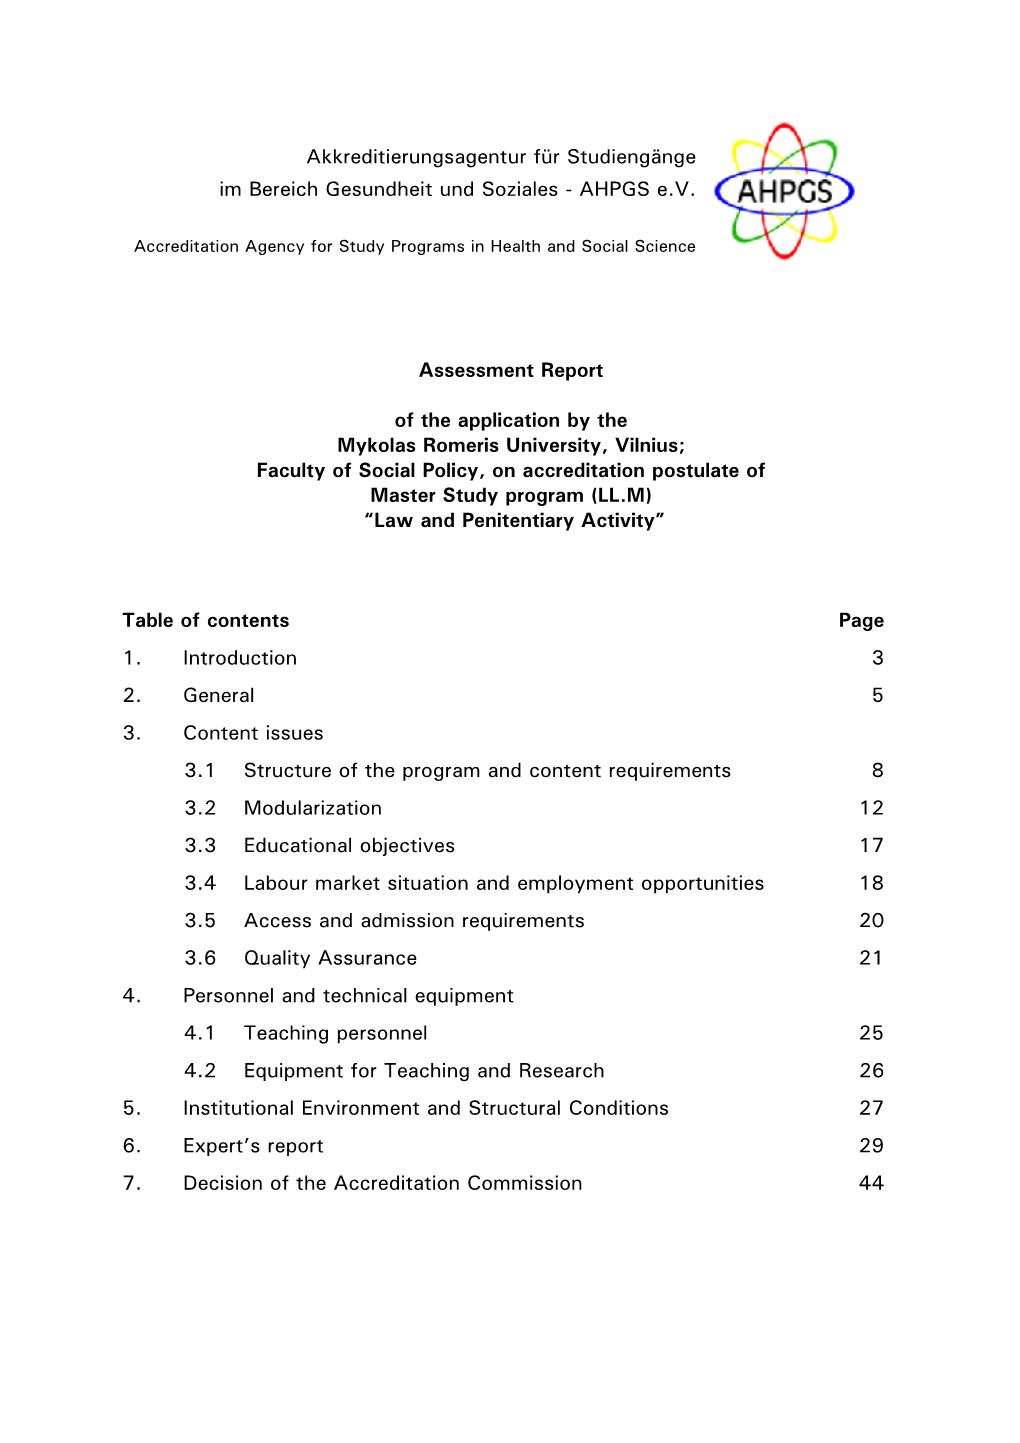 Assessment Report of the Application by the Mykolas Romeris University